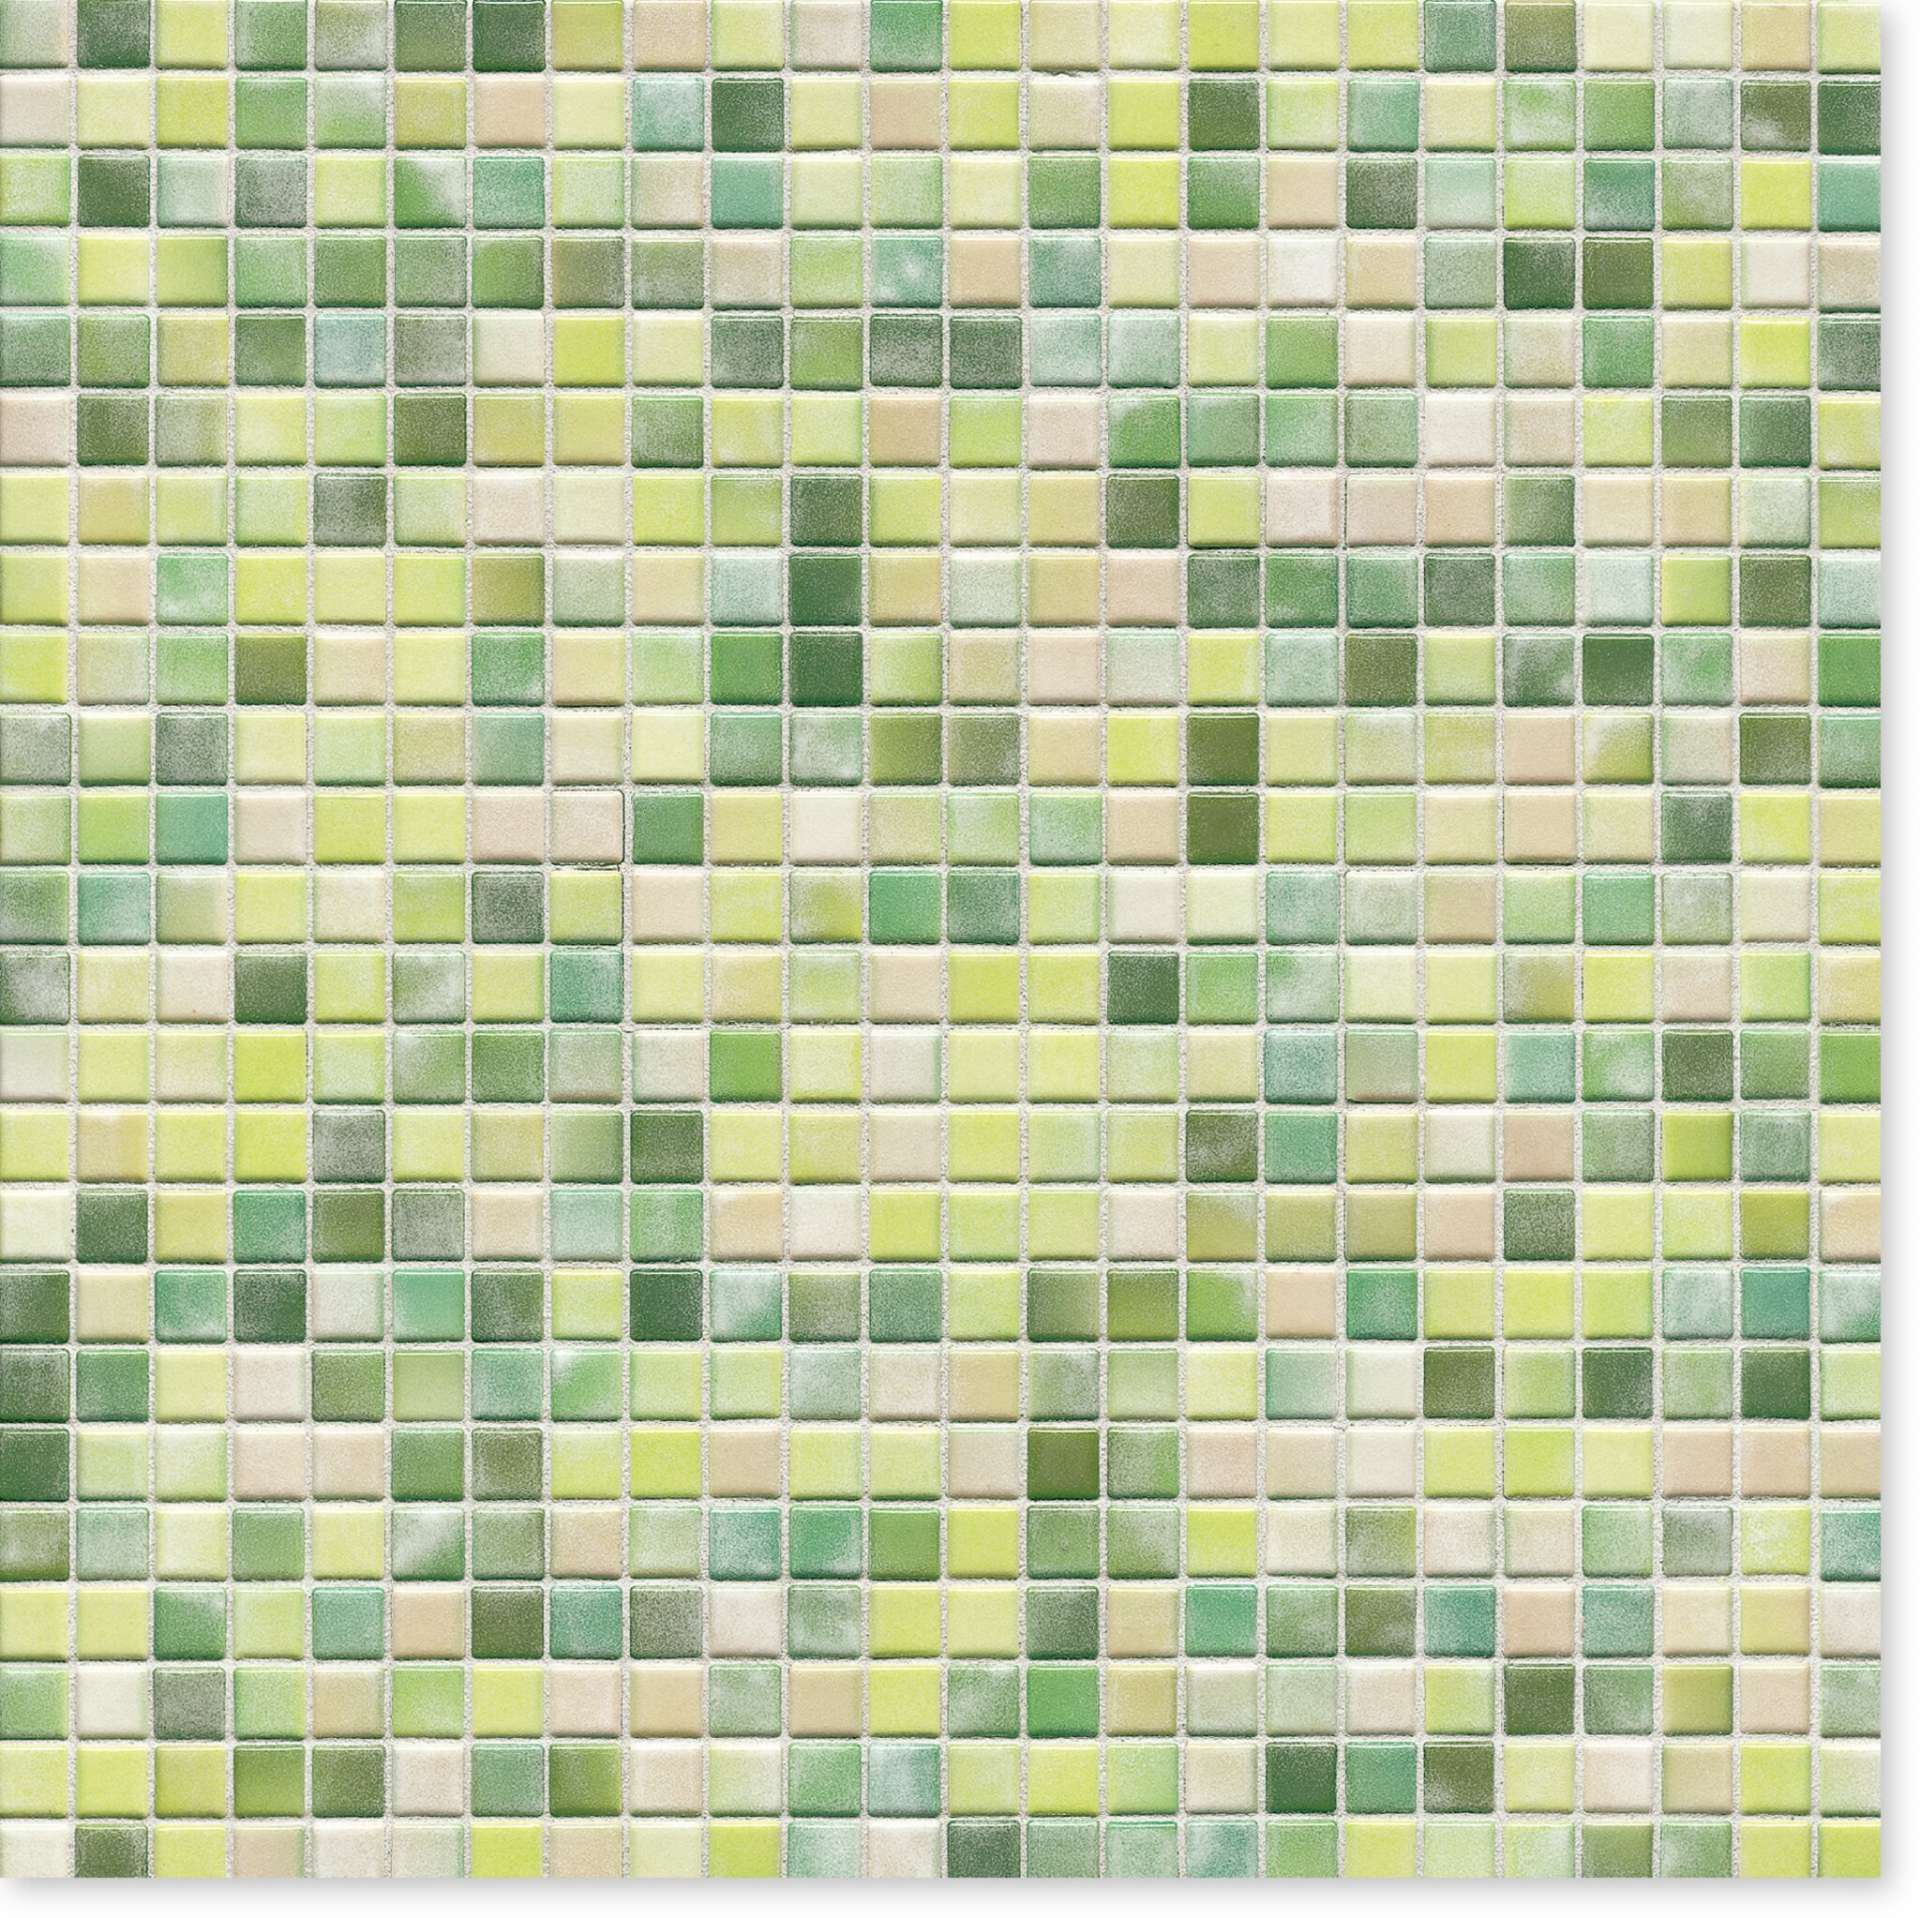 Мозаика Jasba Kauri Aquagr?n-Mix Glzd 8704H-44, цвет зелёный, поверхность глянцевая, квадрат, 316x316